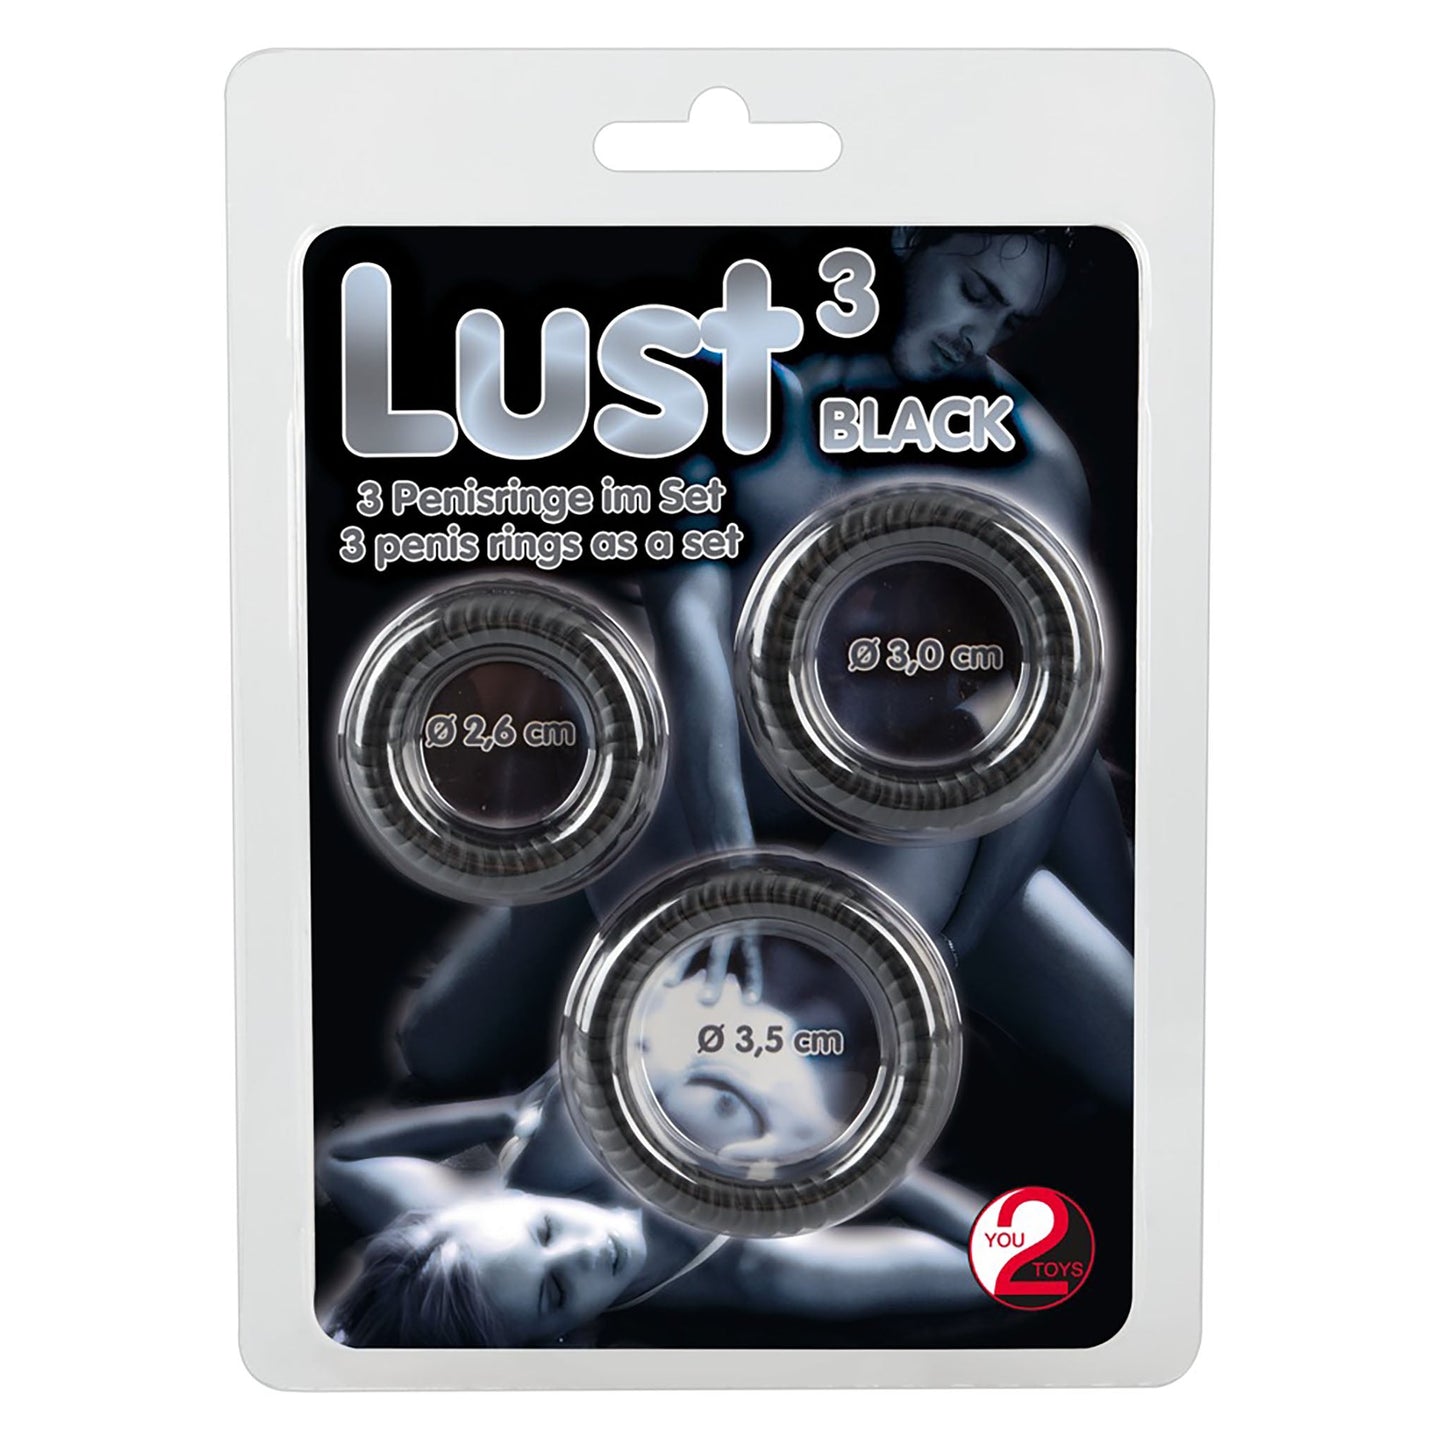 Lust 3 Penisringe, Penis ring set schwarz in Verpackung